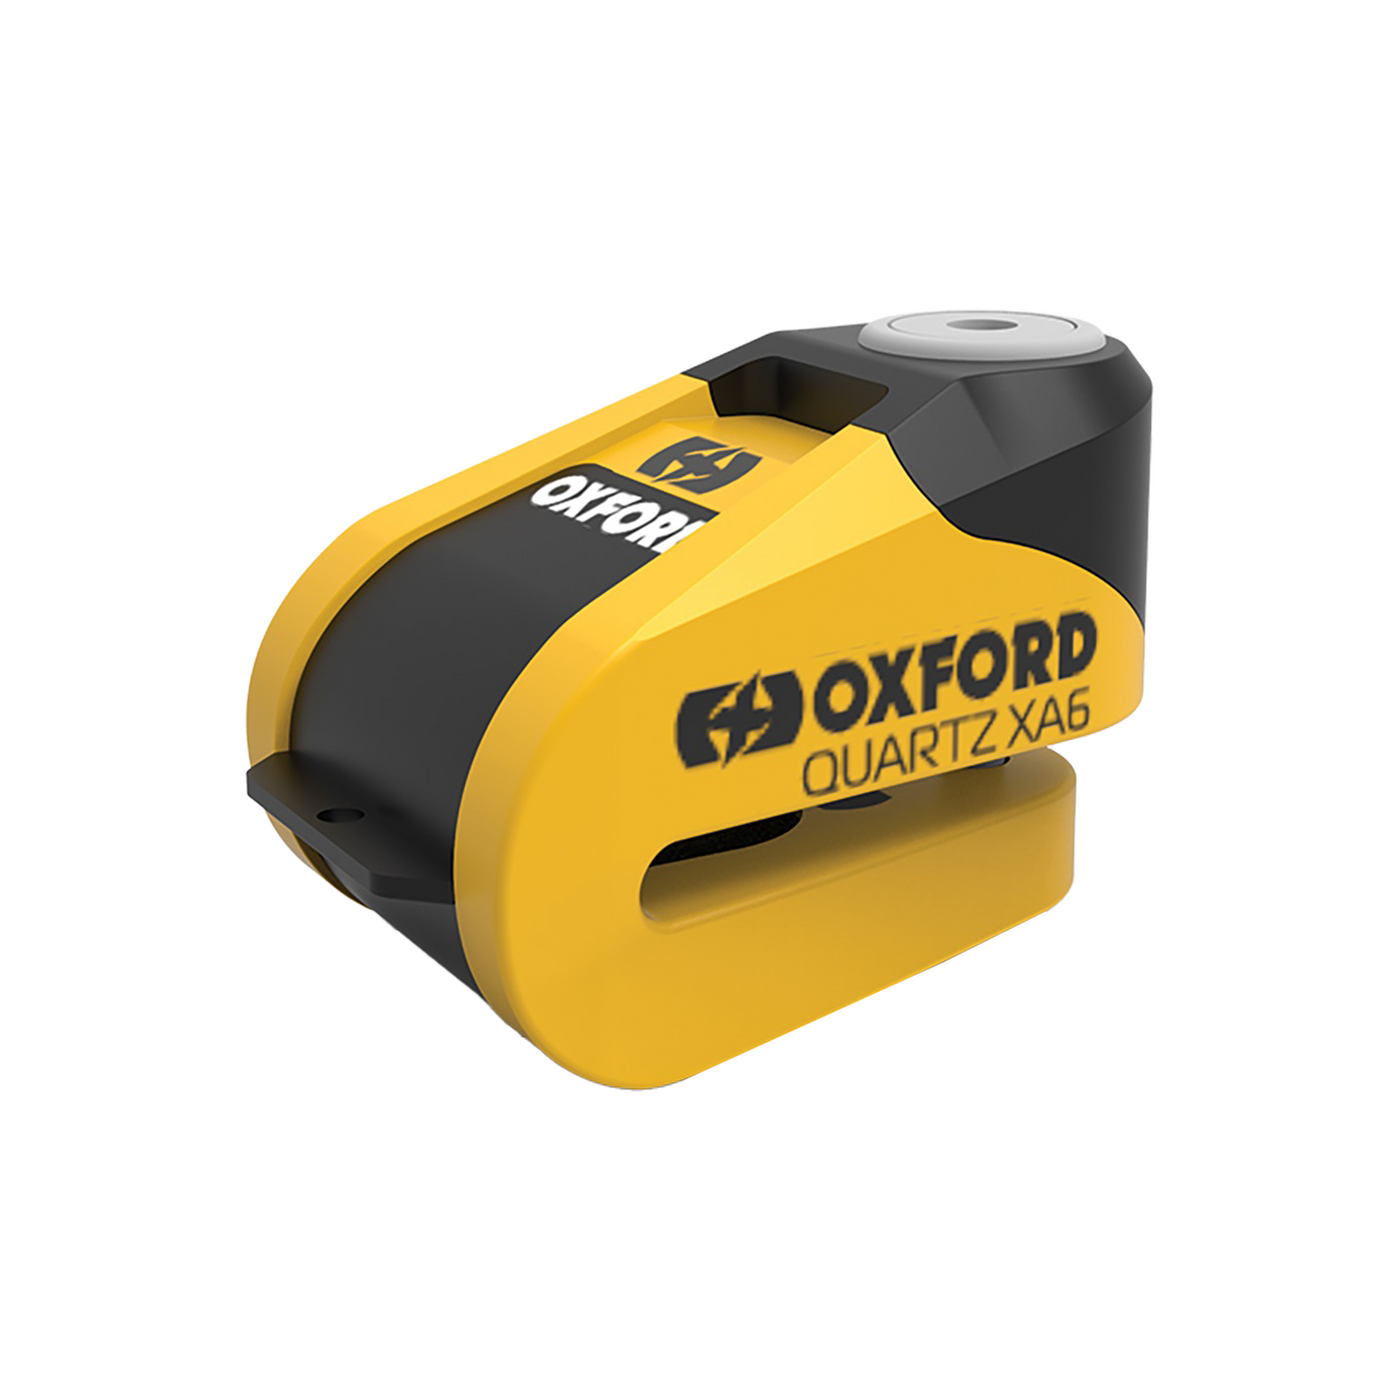 Oxford Quartz XA6 Disc Lock, 110dB Alarm